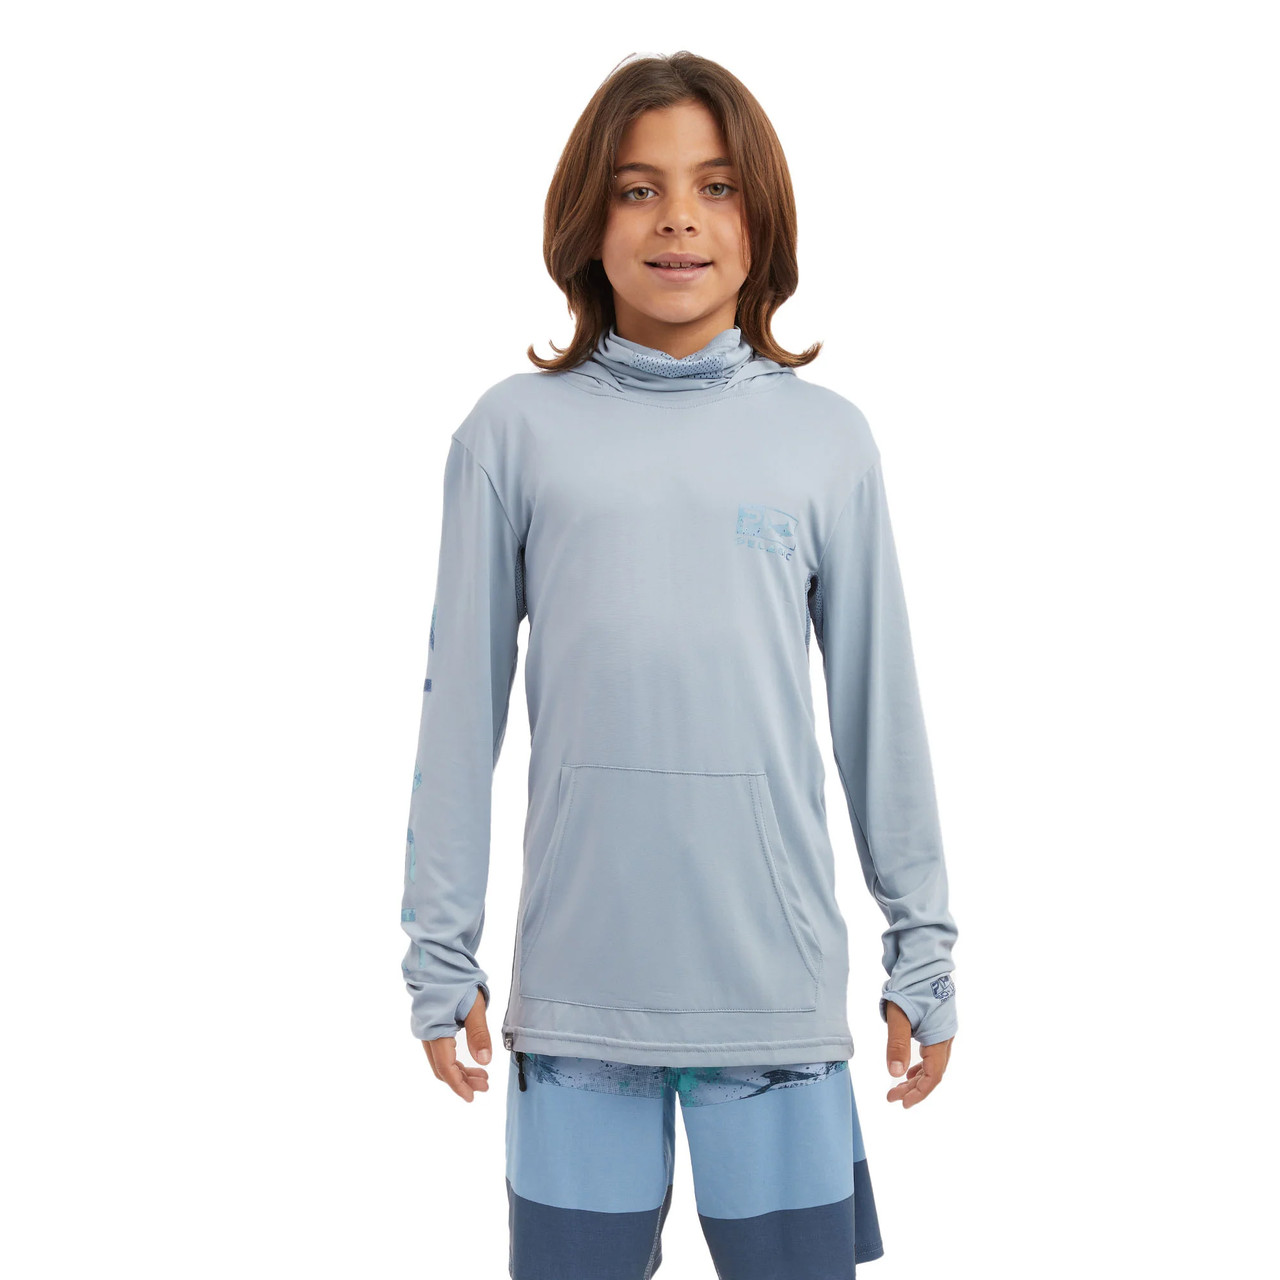 Pelagic Defcon Icon Open Seas Performance Shirt (Kid’s)